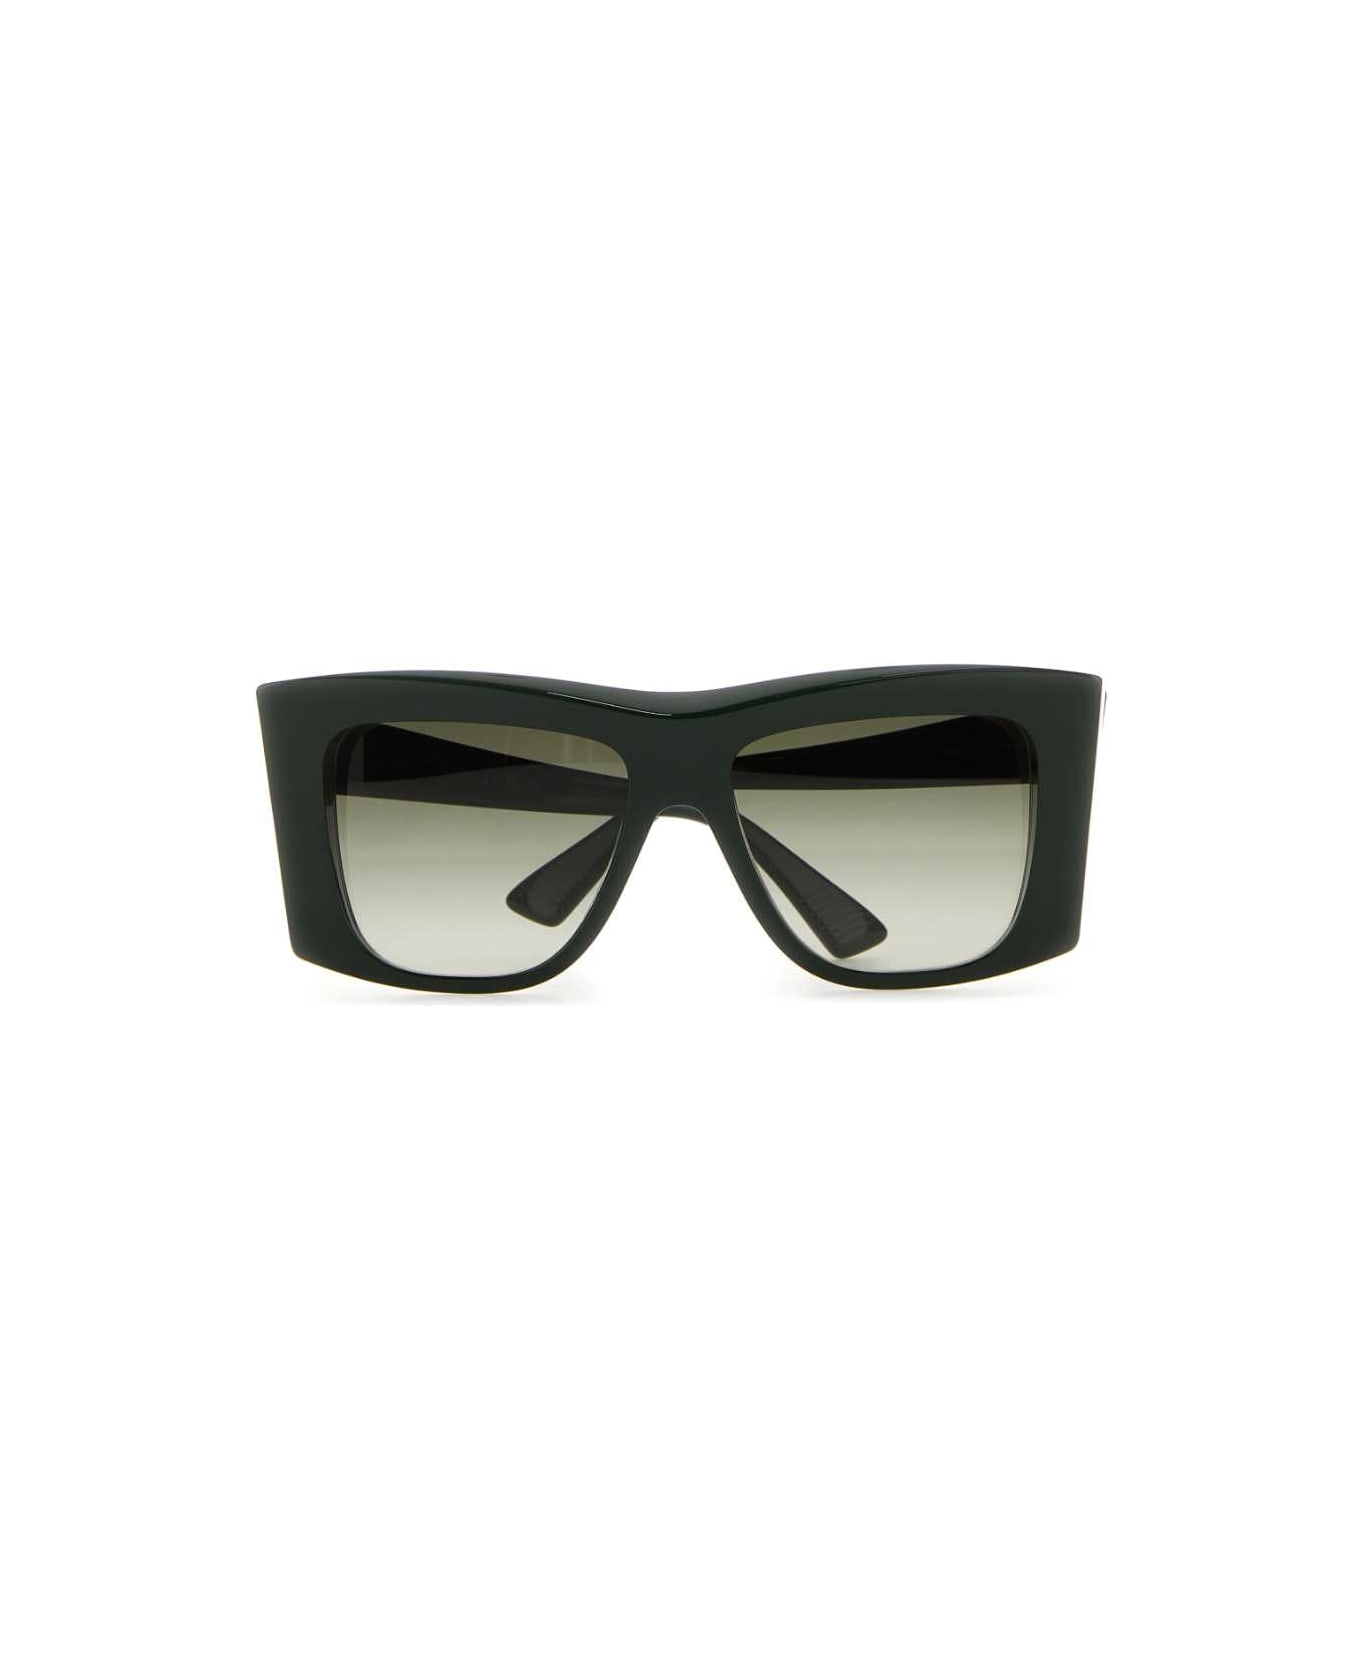 Bottega Veneta Black Acetate Sunglasses - GREENGREEN サングラス